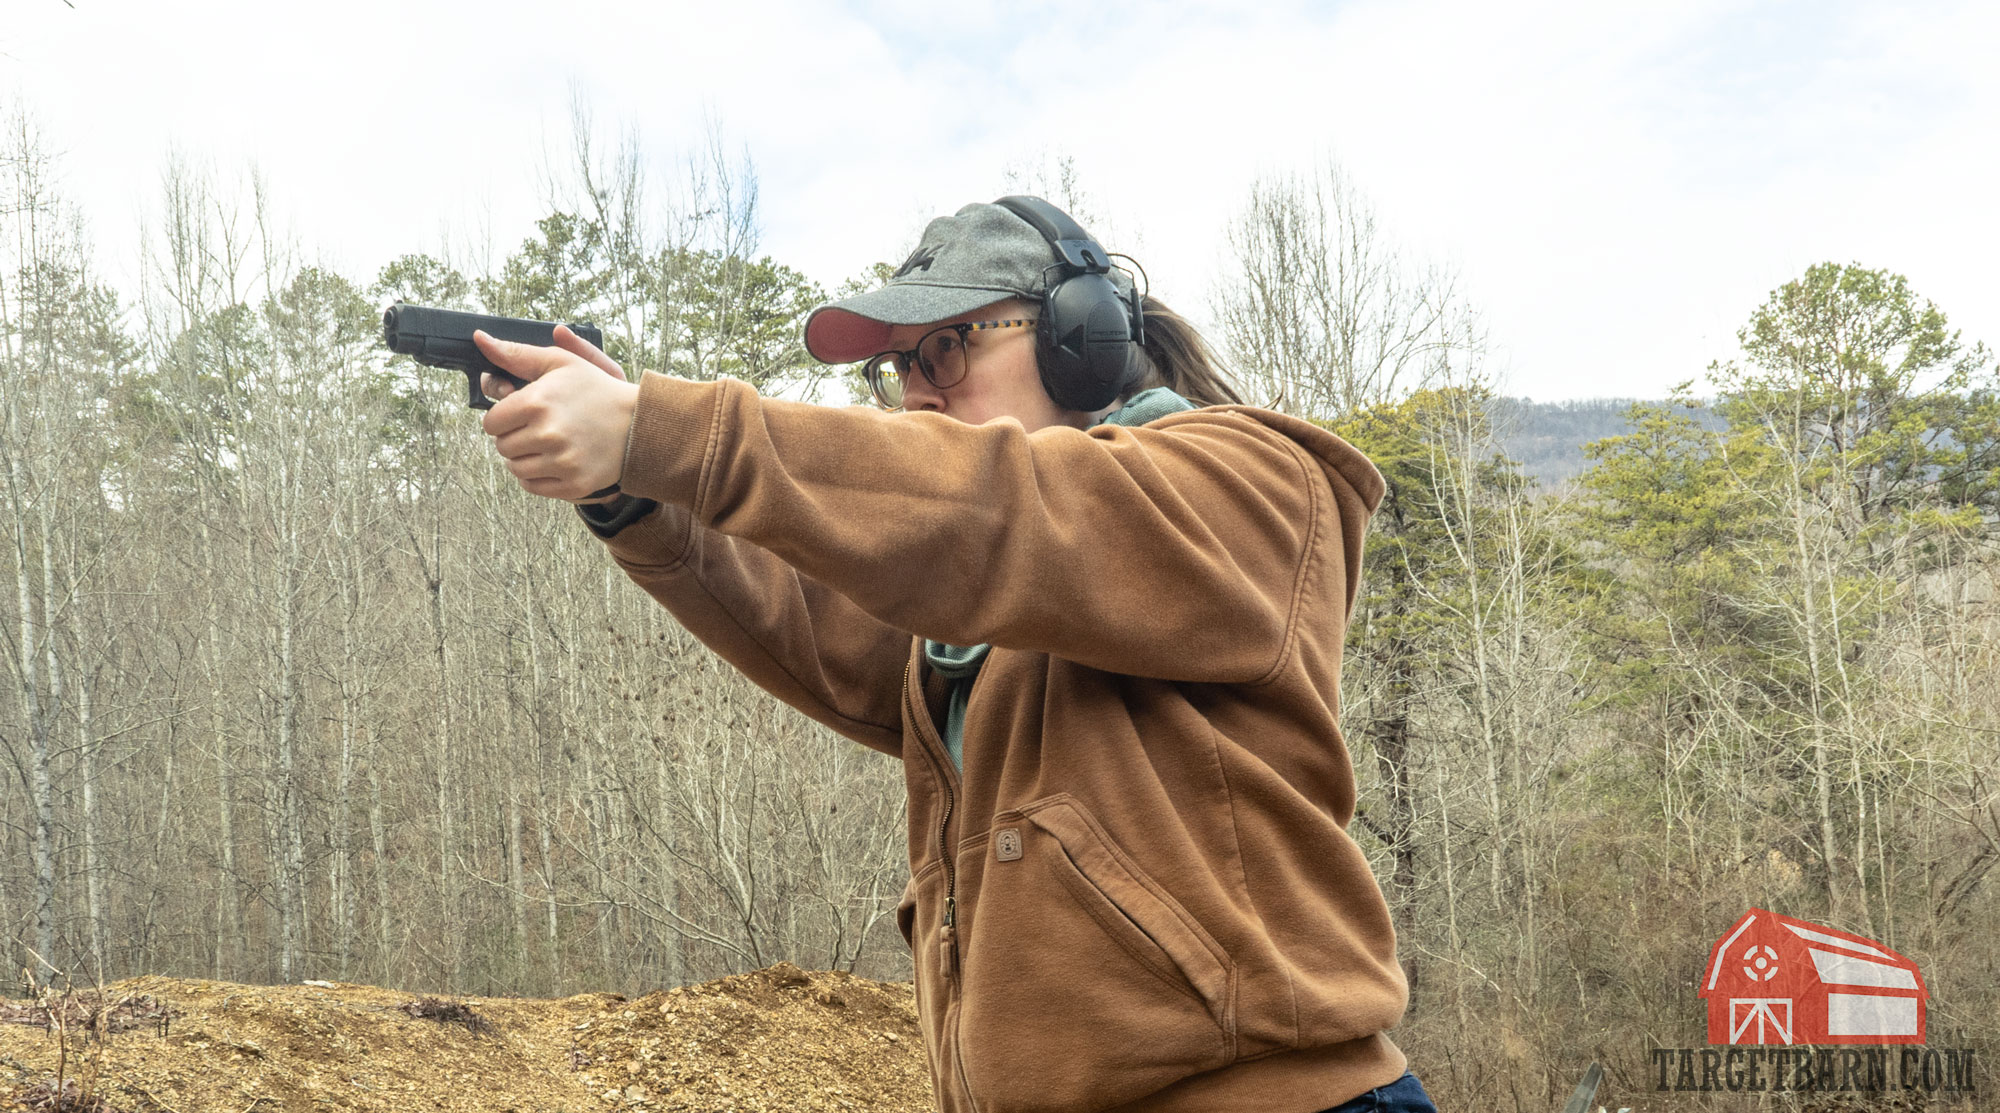 mckenzie shooting a 9mm glock pistol at the range